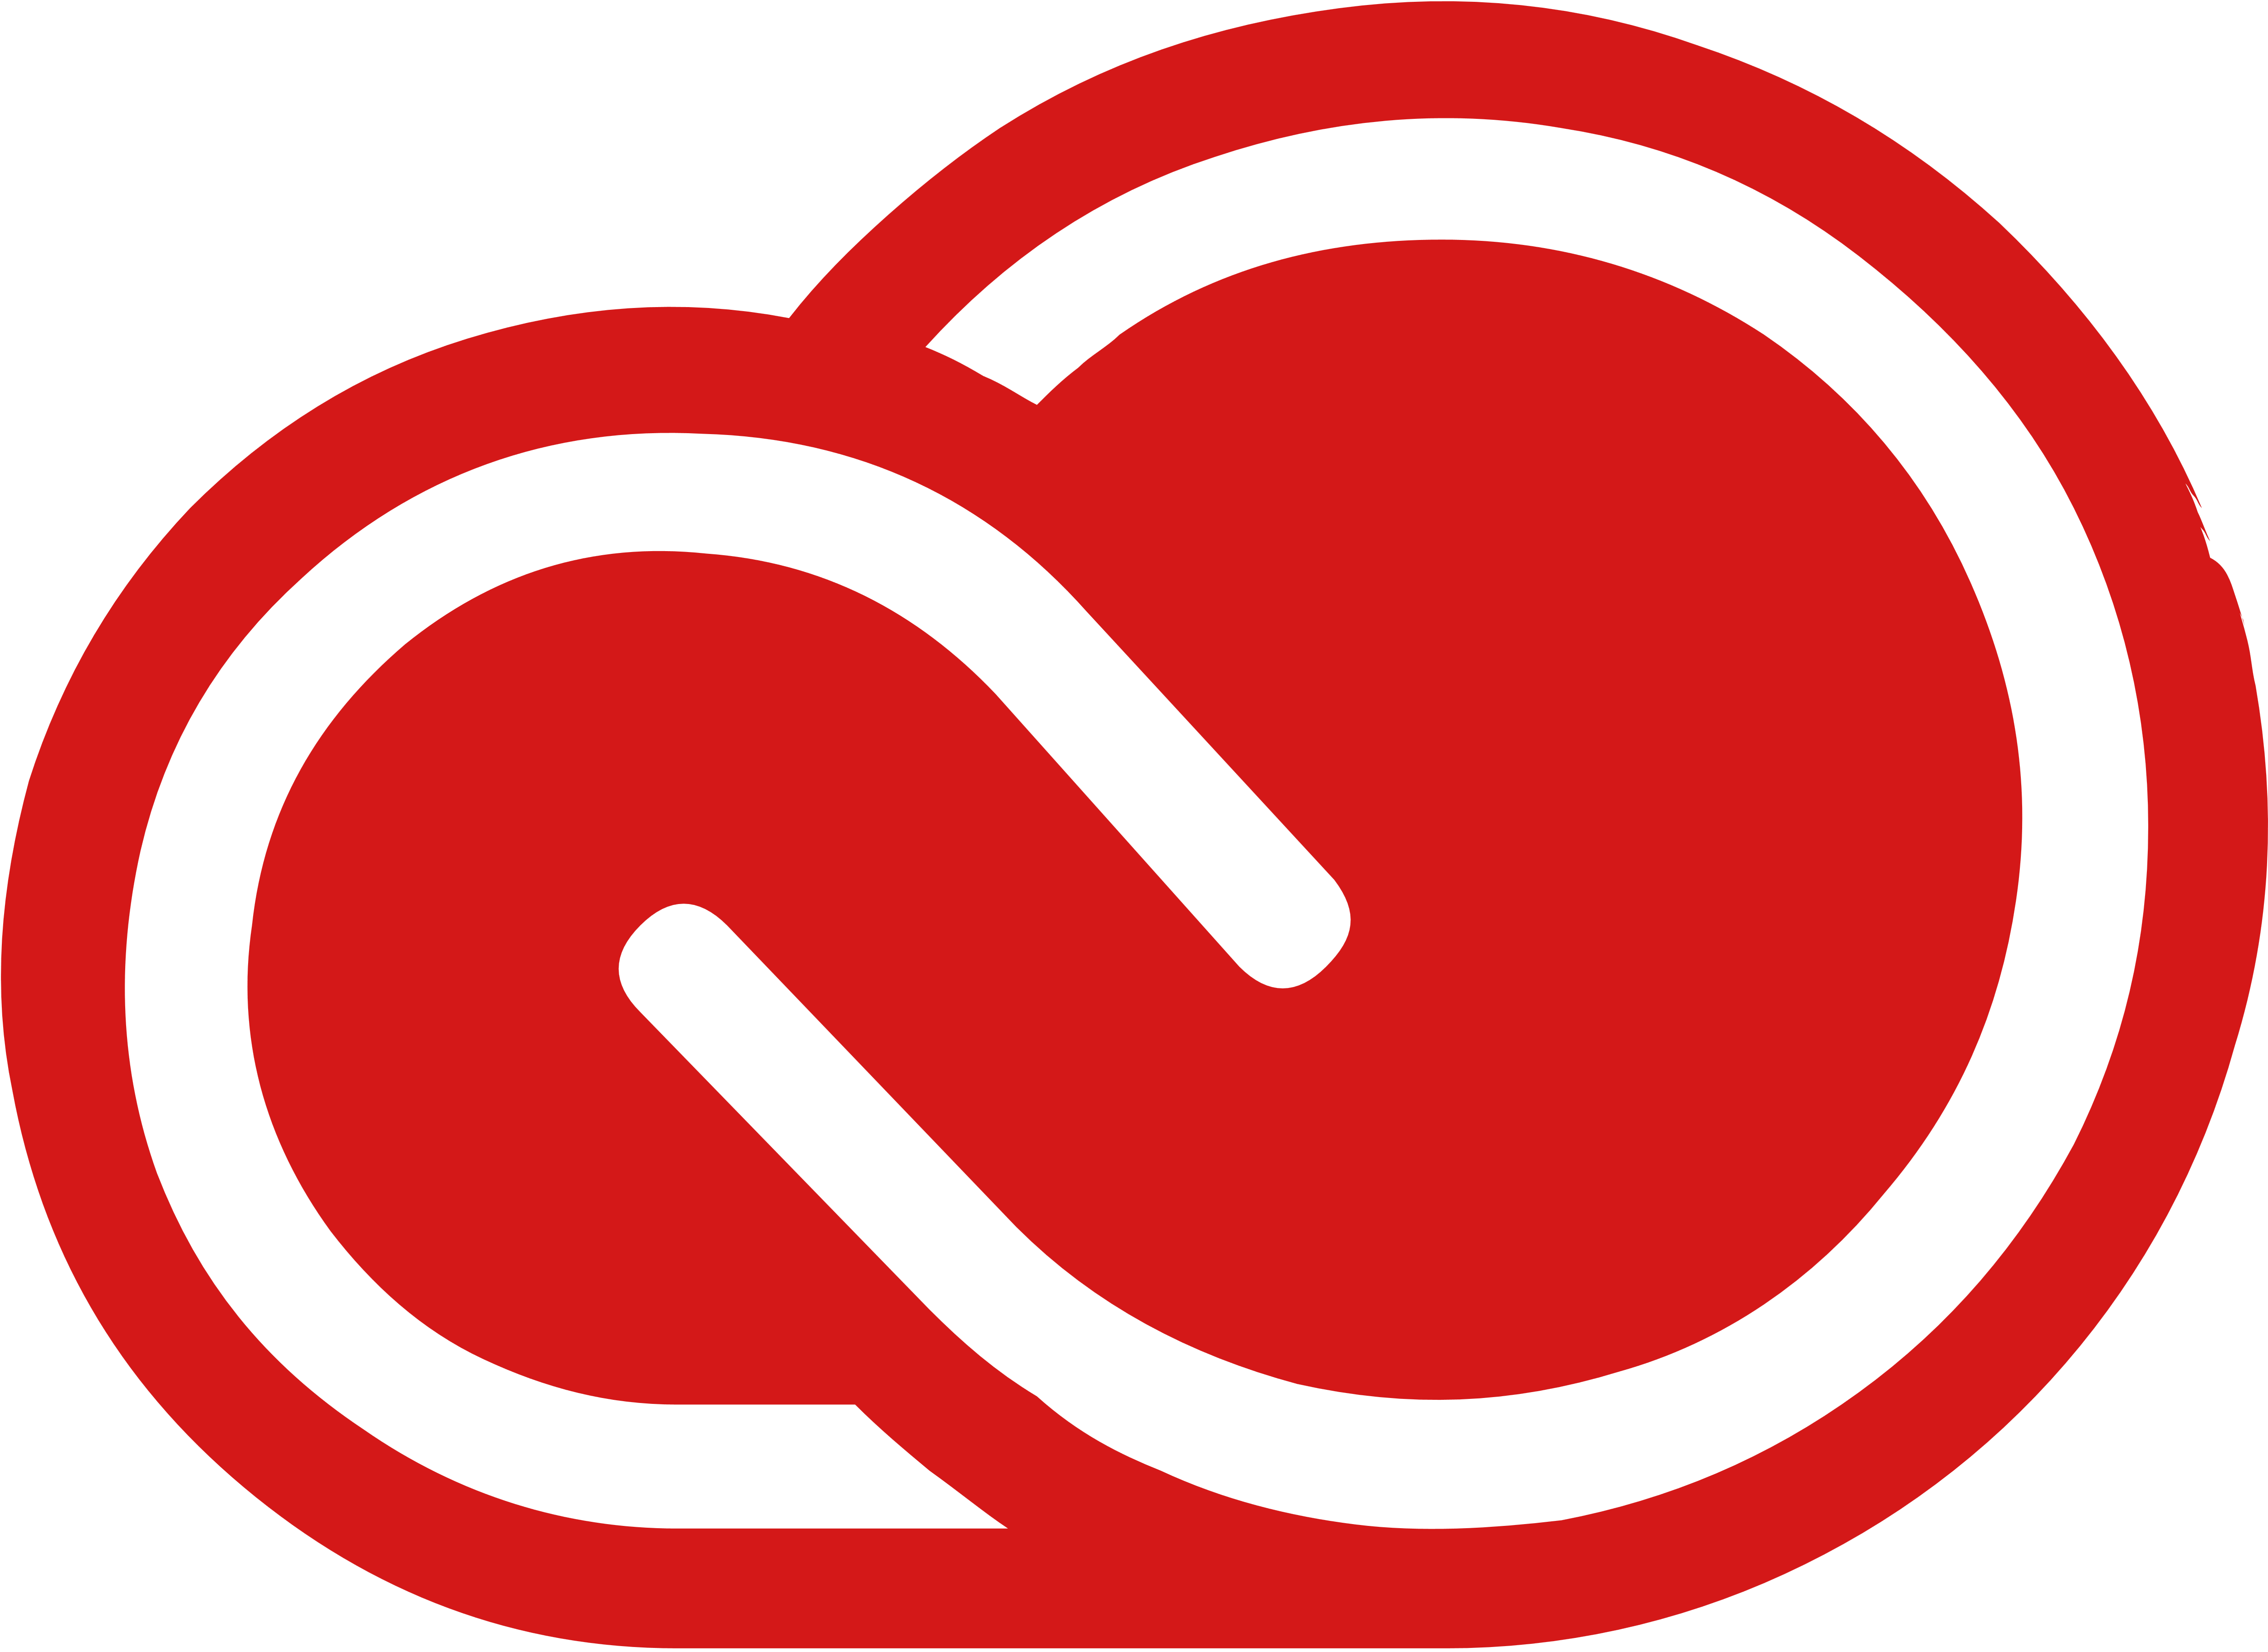 Adobe Creative Cloud logo